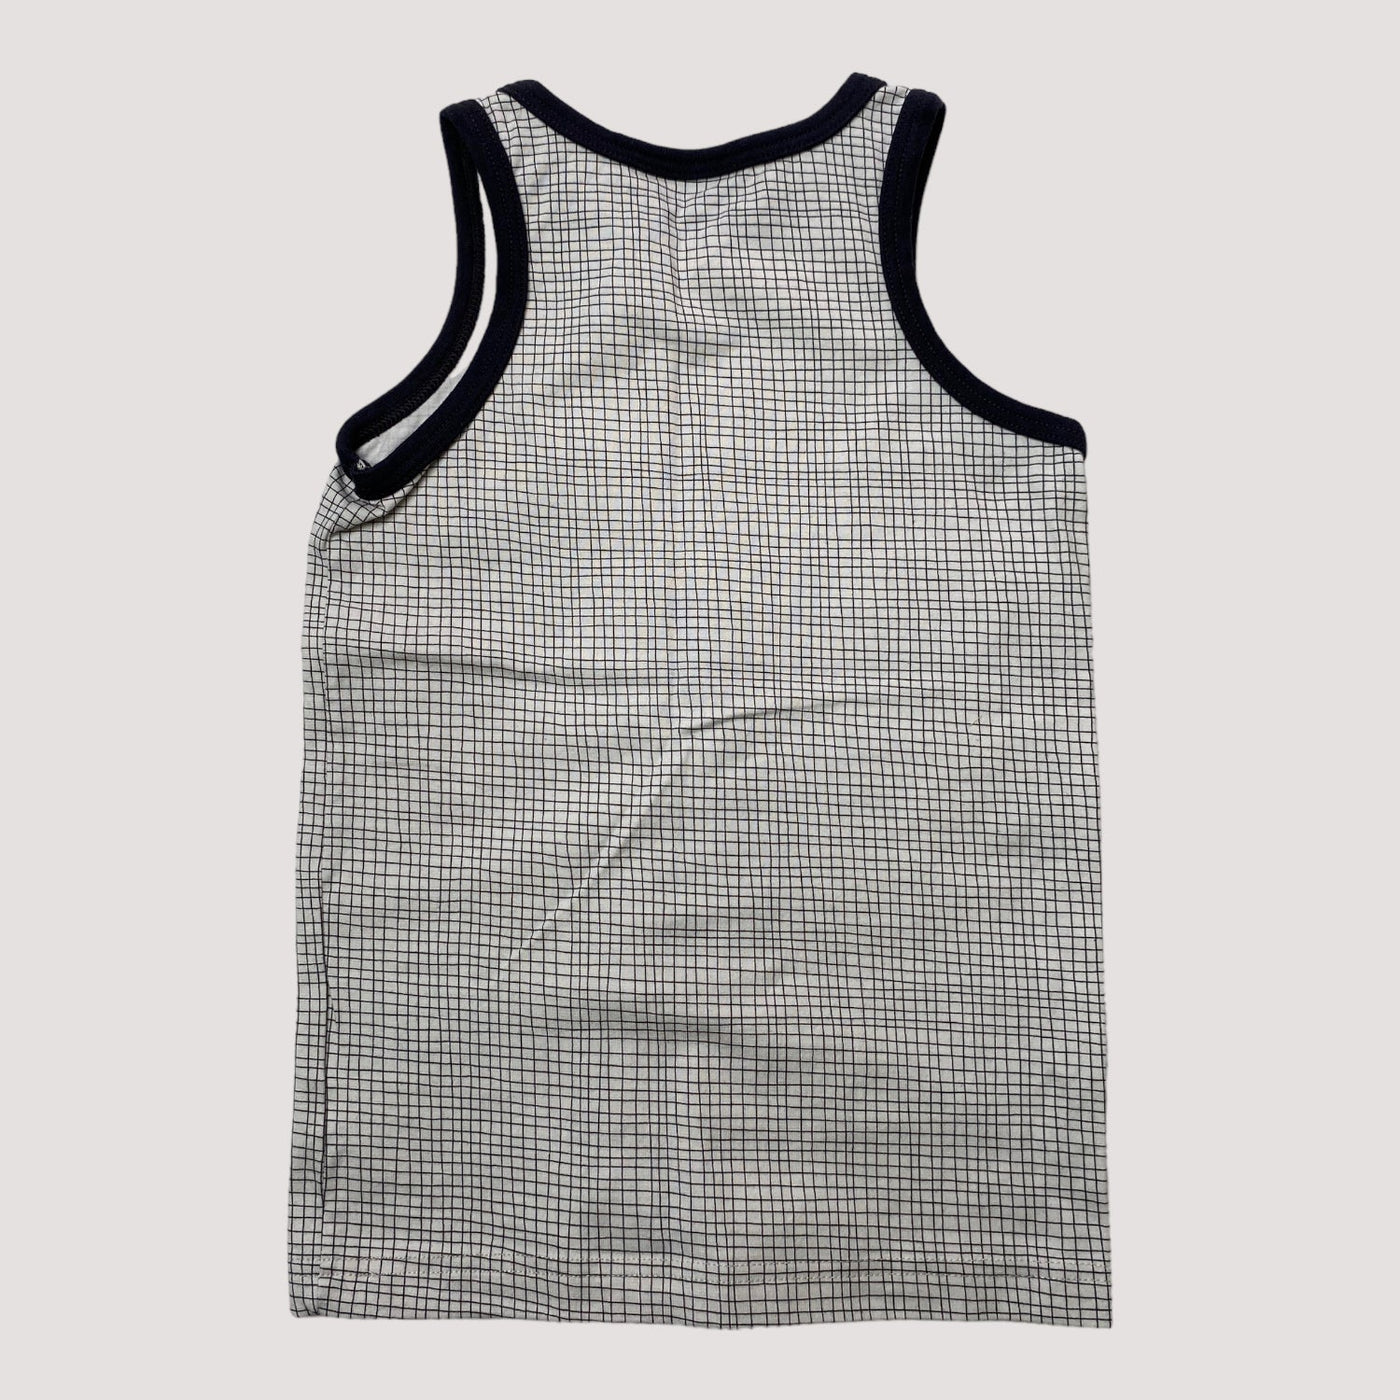 Papu top, grid print | 98/104cm